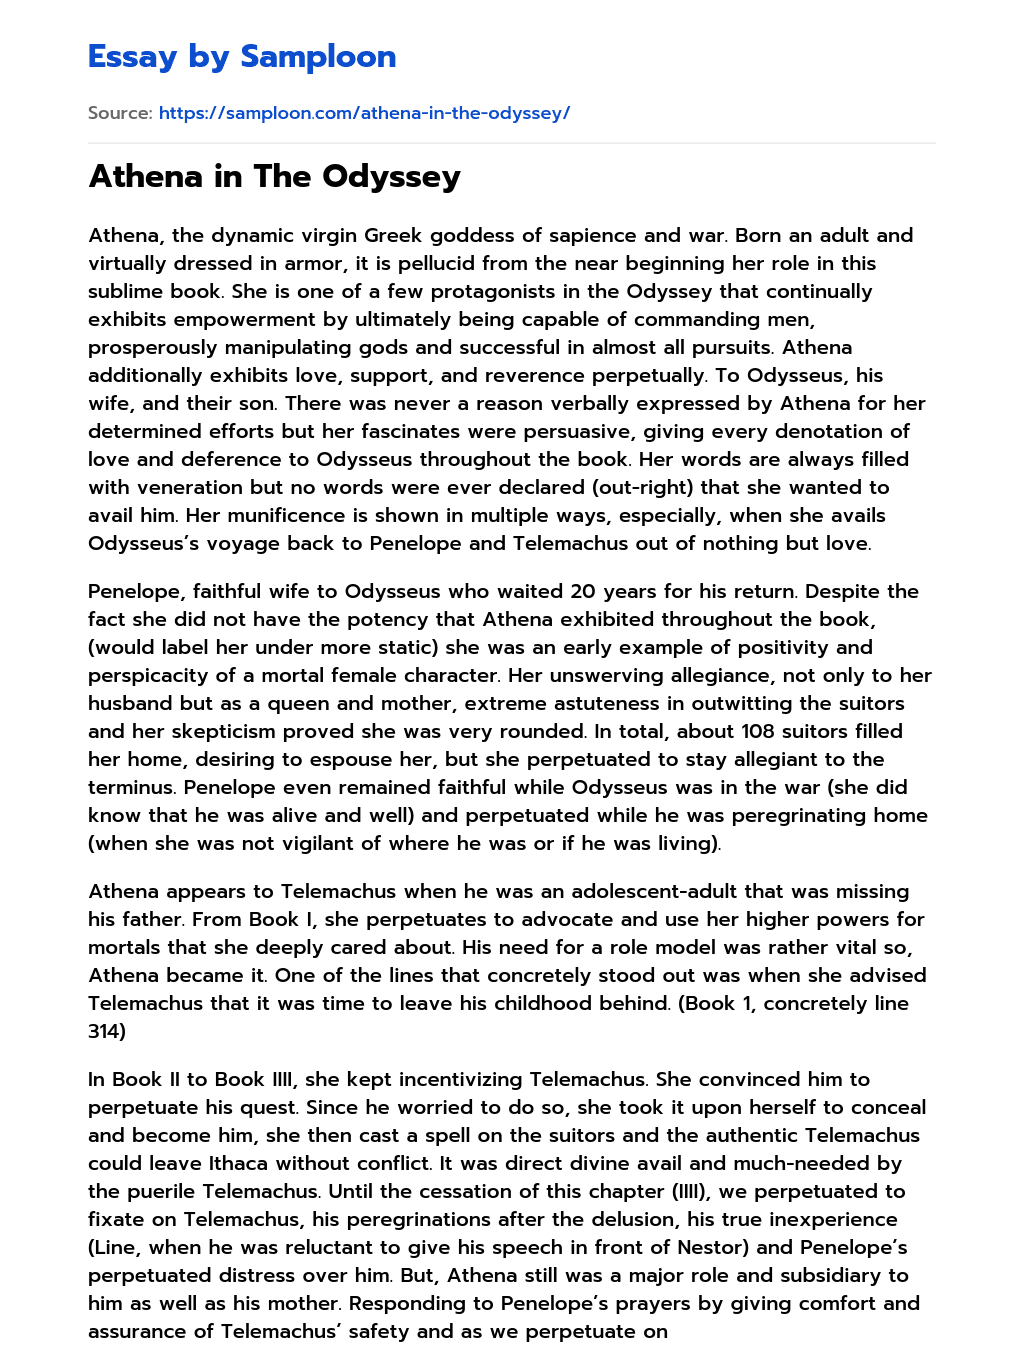 Athena in The Odyssey essay